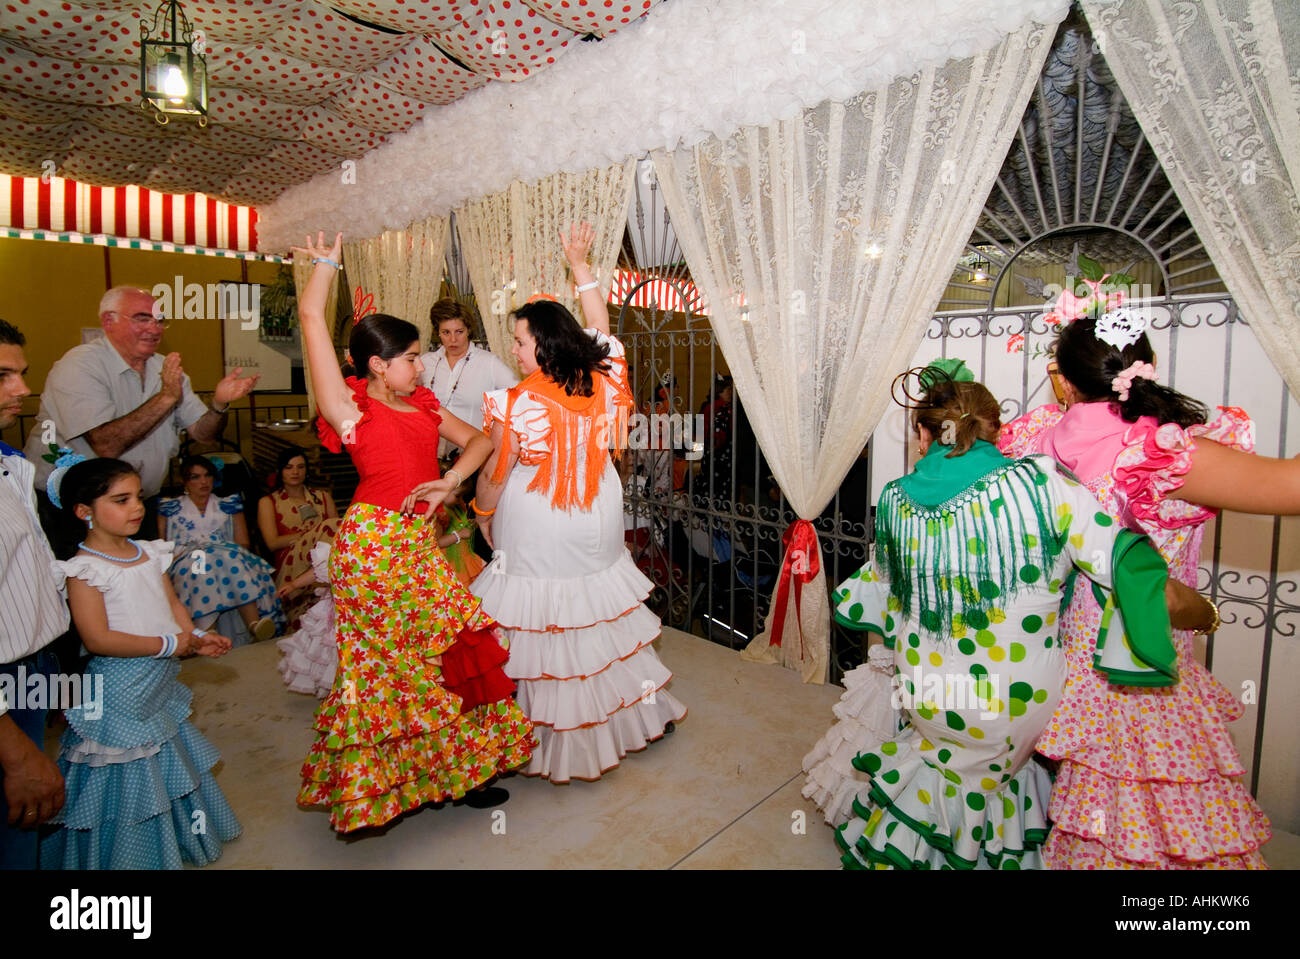 Annual feria de Sevilla, Seville Fair. Women dancing Sevillanas, the traditional dance on the Feria de Abril,  April Fair Stock Photo